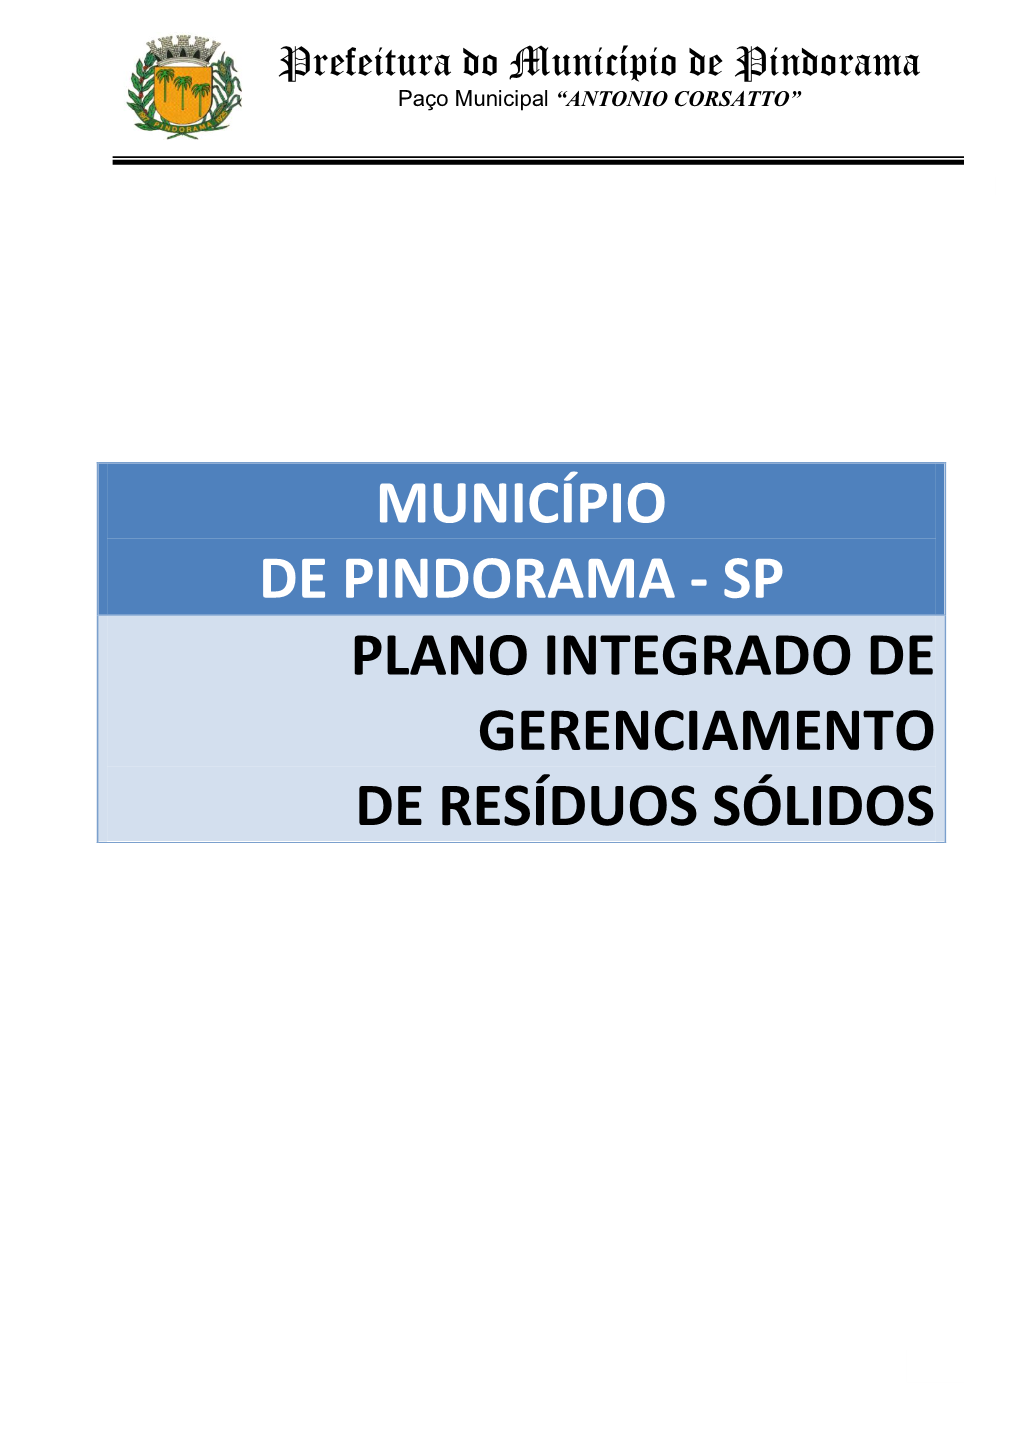 Município De Pindorama Paço Municipal “ANTONIO CORSATTO”